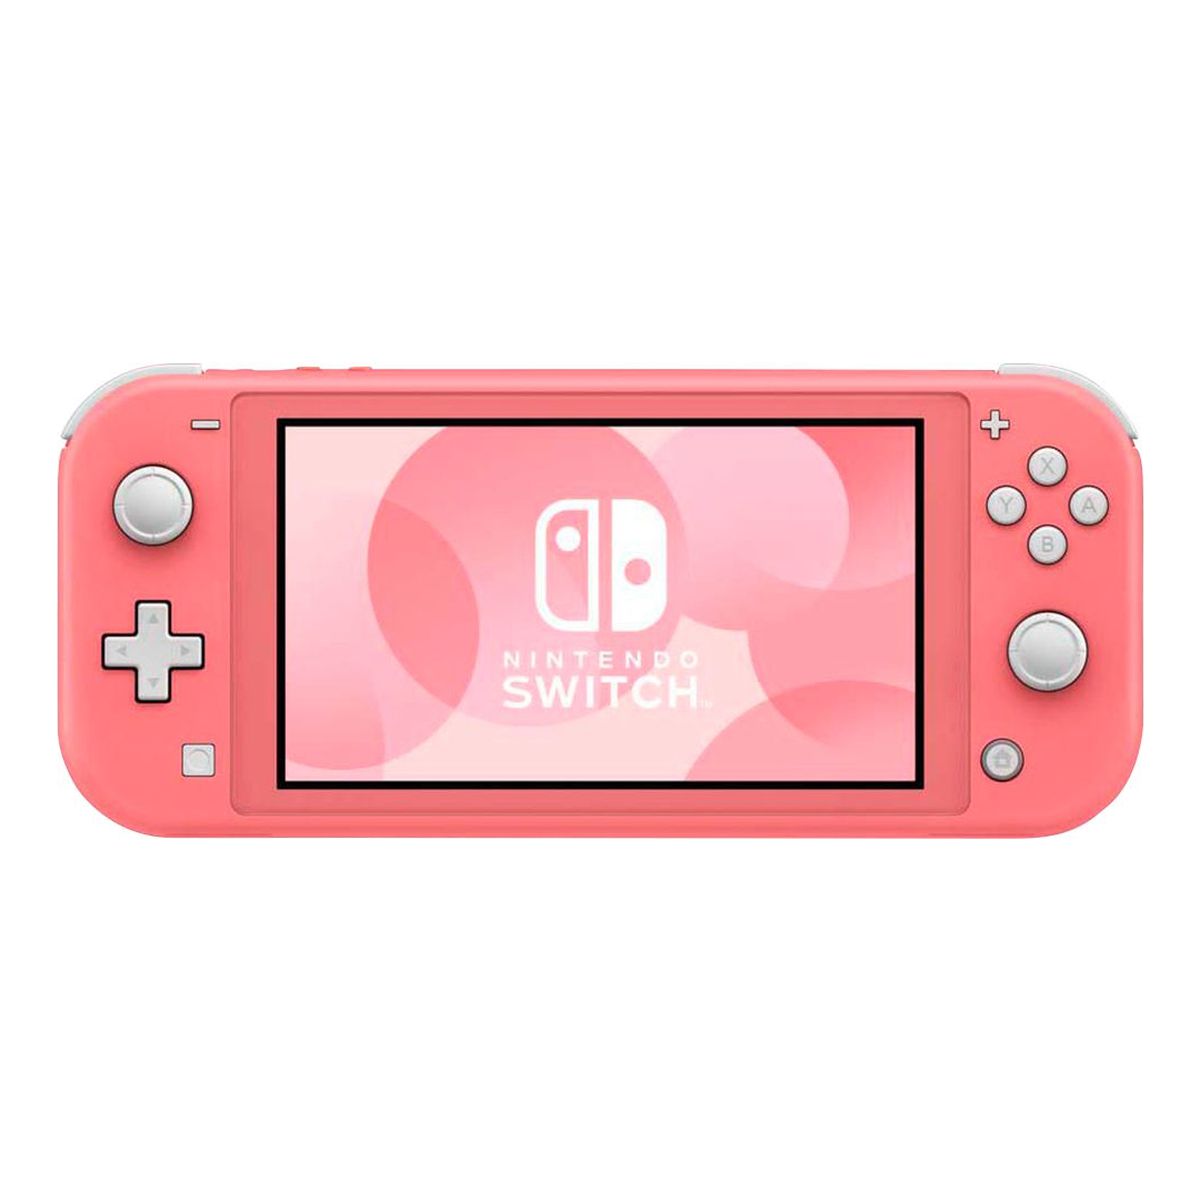 Nintendo Switch Lite Pink Press Image